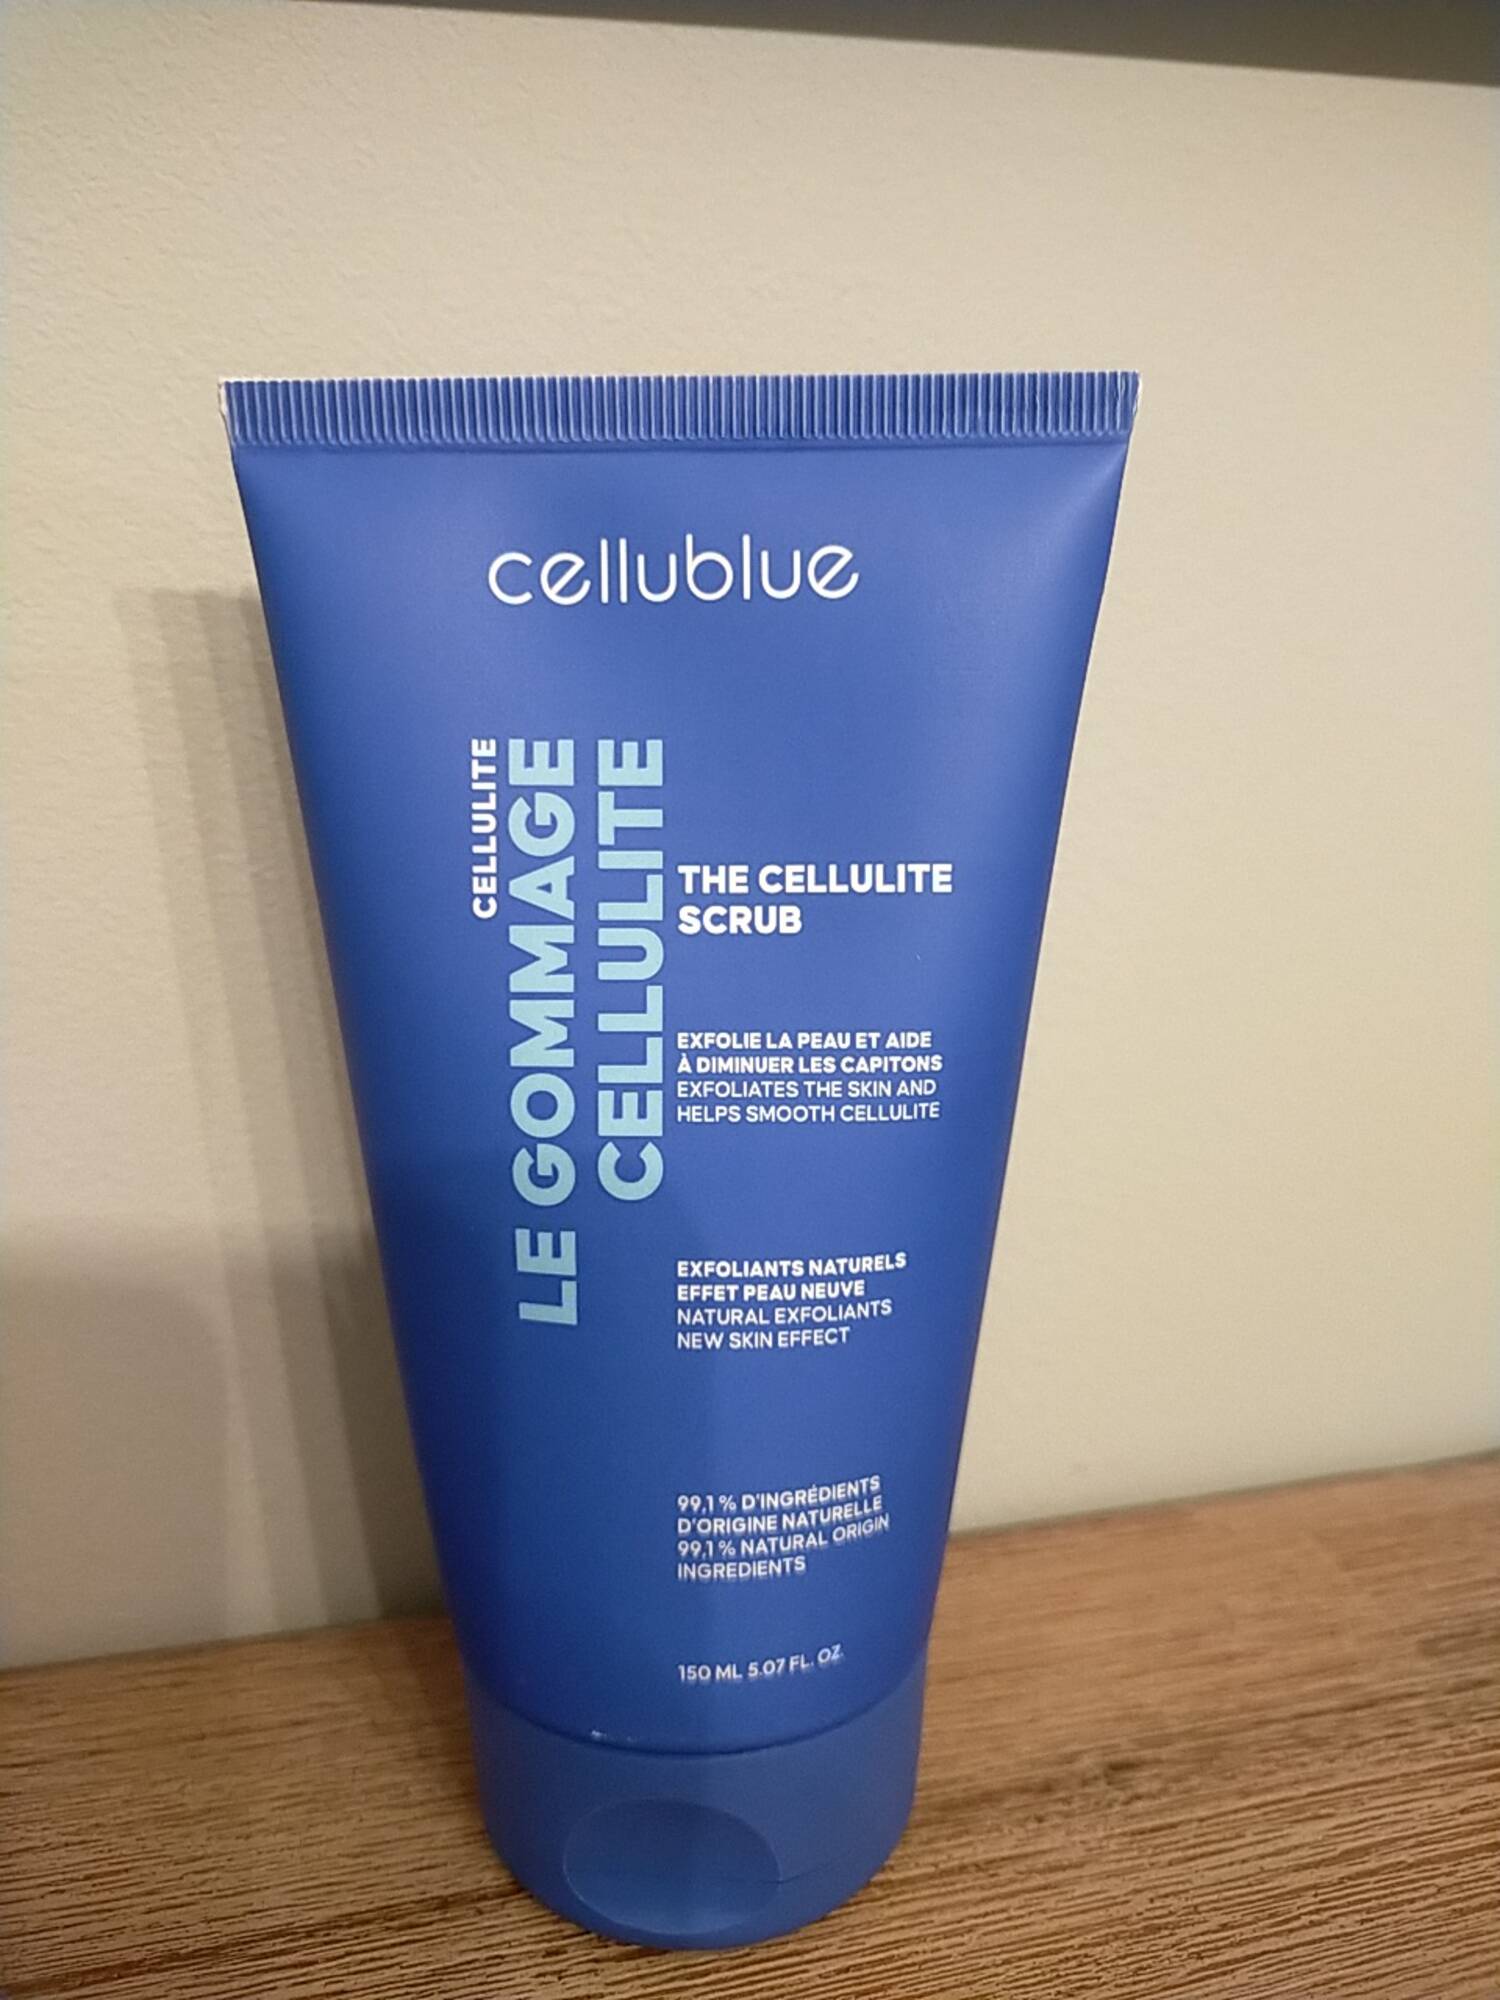 CELLUBLUE - Le gommage cellulite